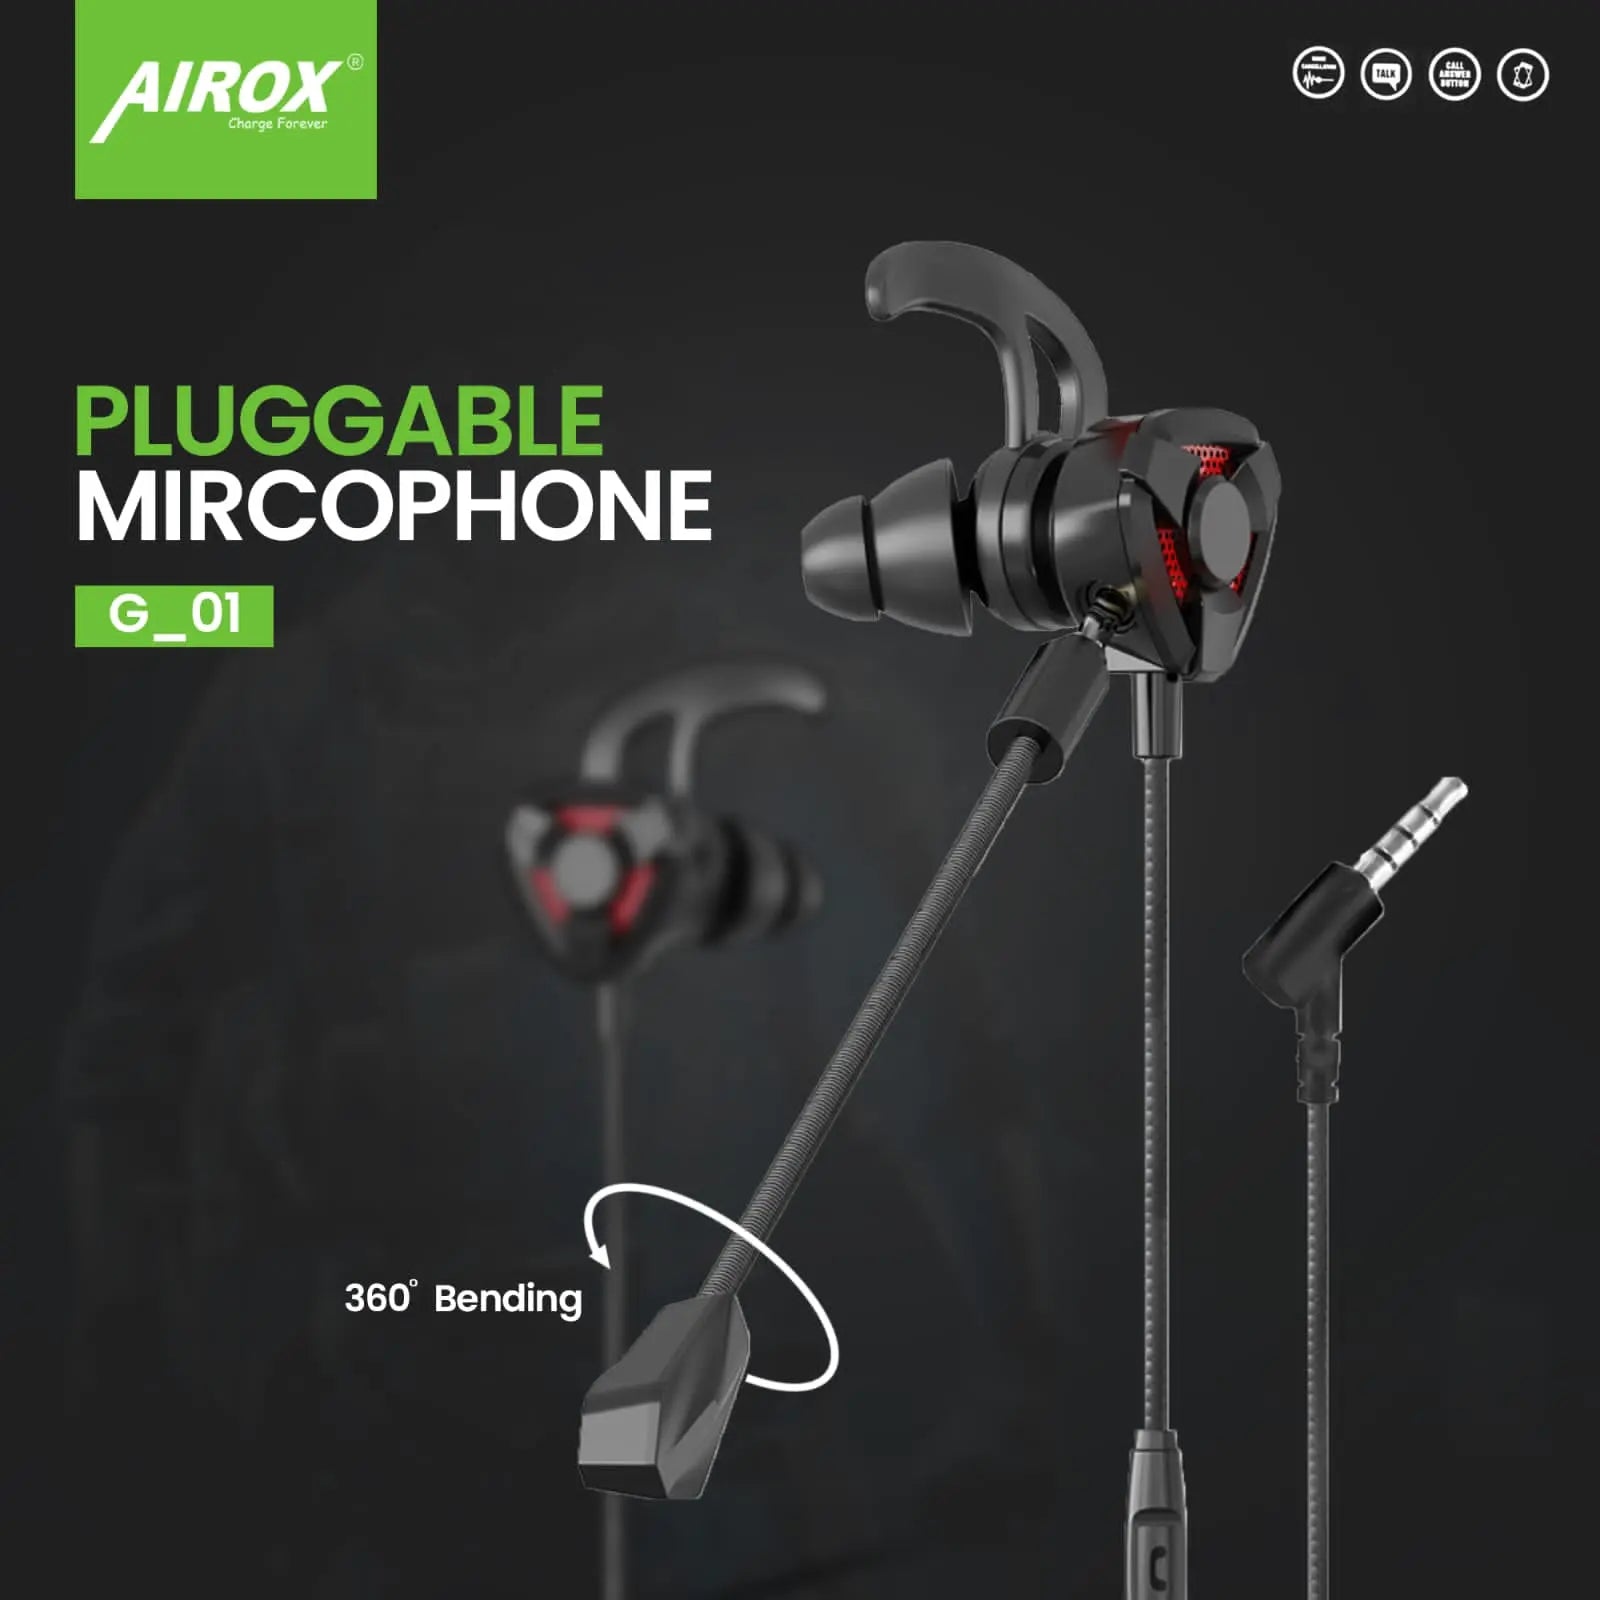 Airox G-01 Delta Pro Gaming Dual Mic Earphones Price in Pakistan - Airox.pk